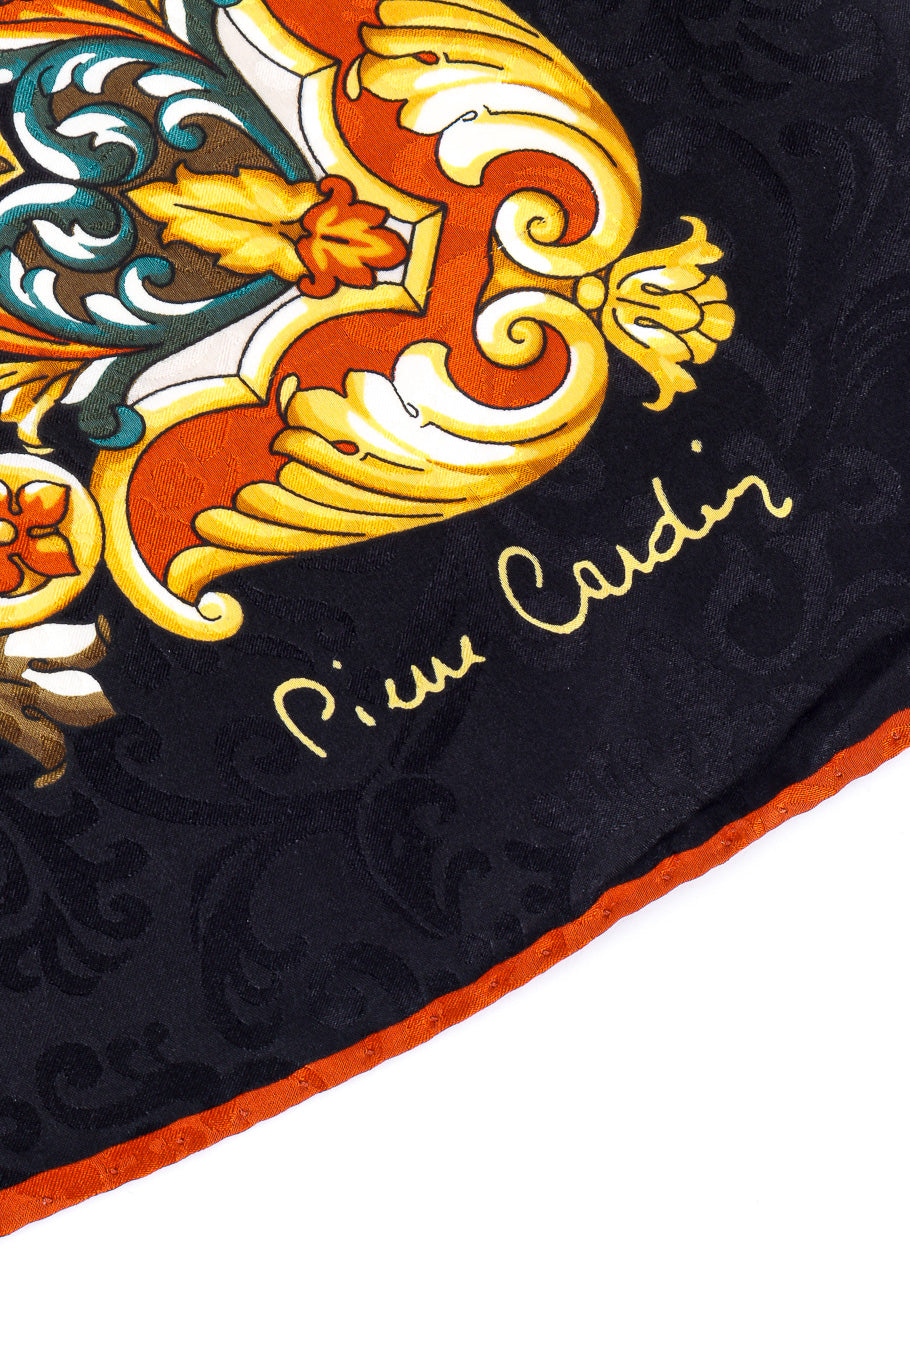 Merry-go-round print scarf by Pierre Cardin photo of Designer Signature. @recessla